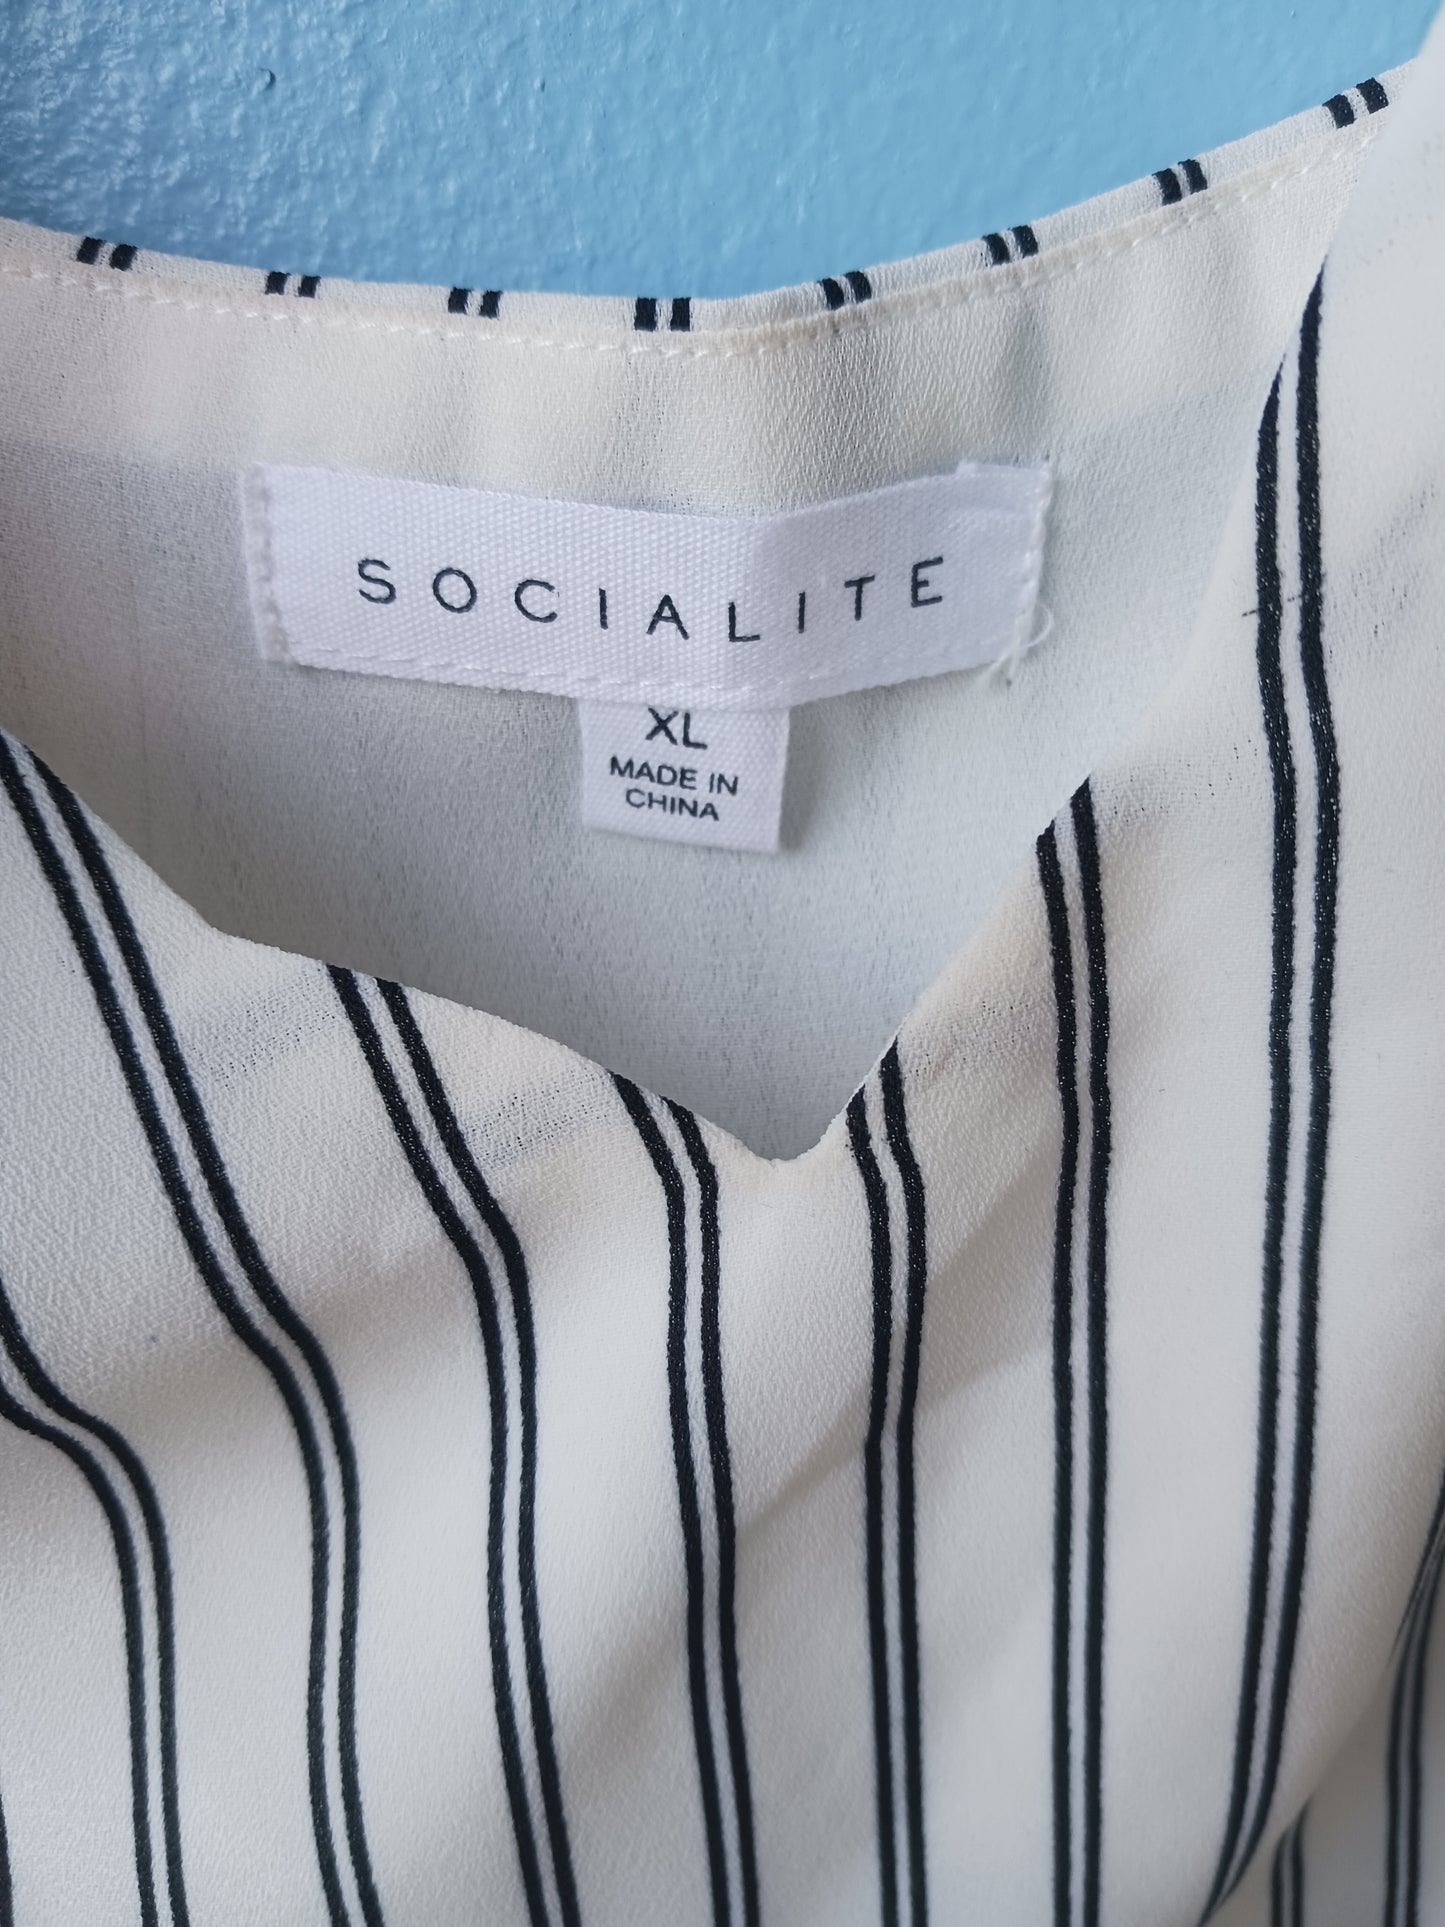 Socialite Vertically Striped Camisole, Size XL